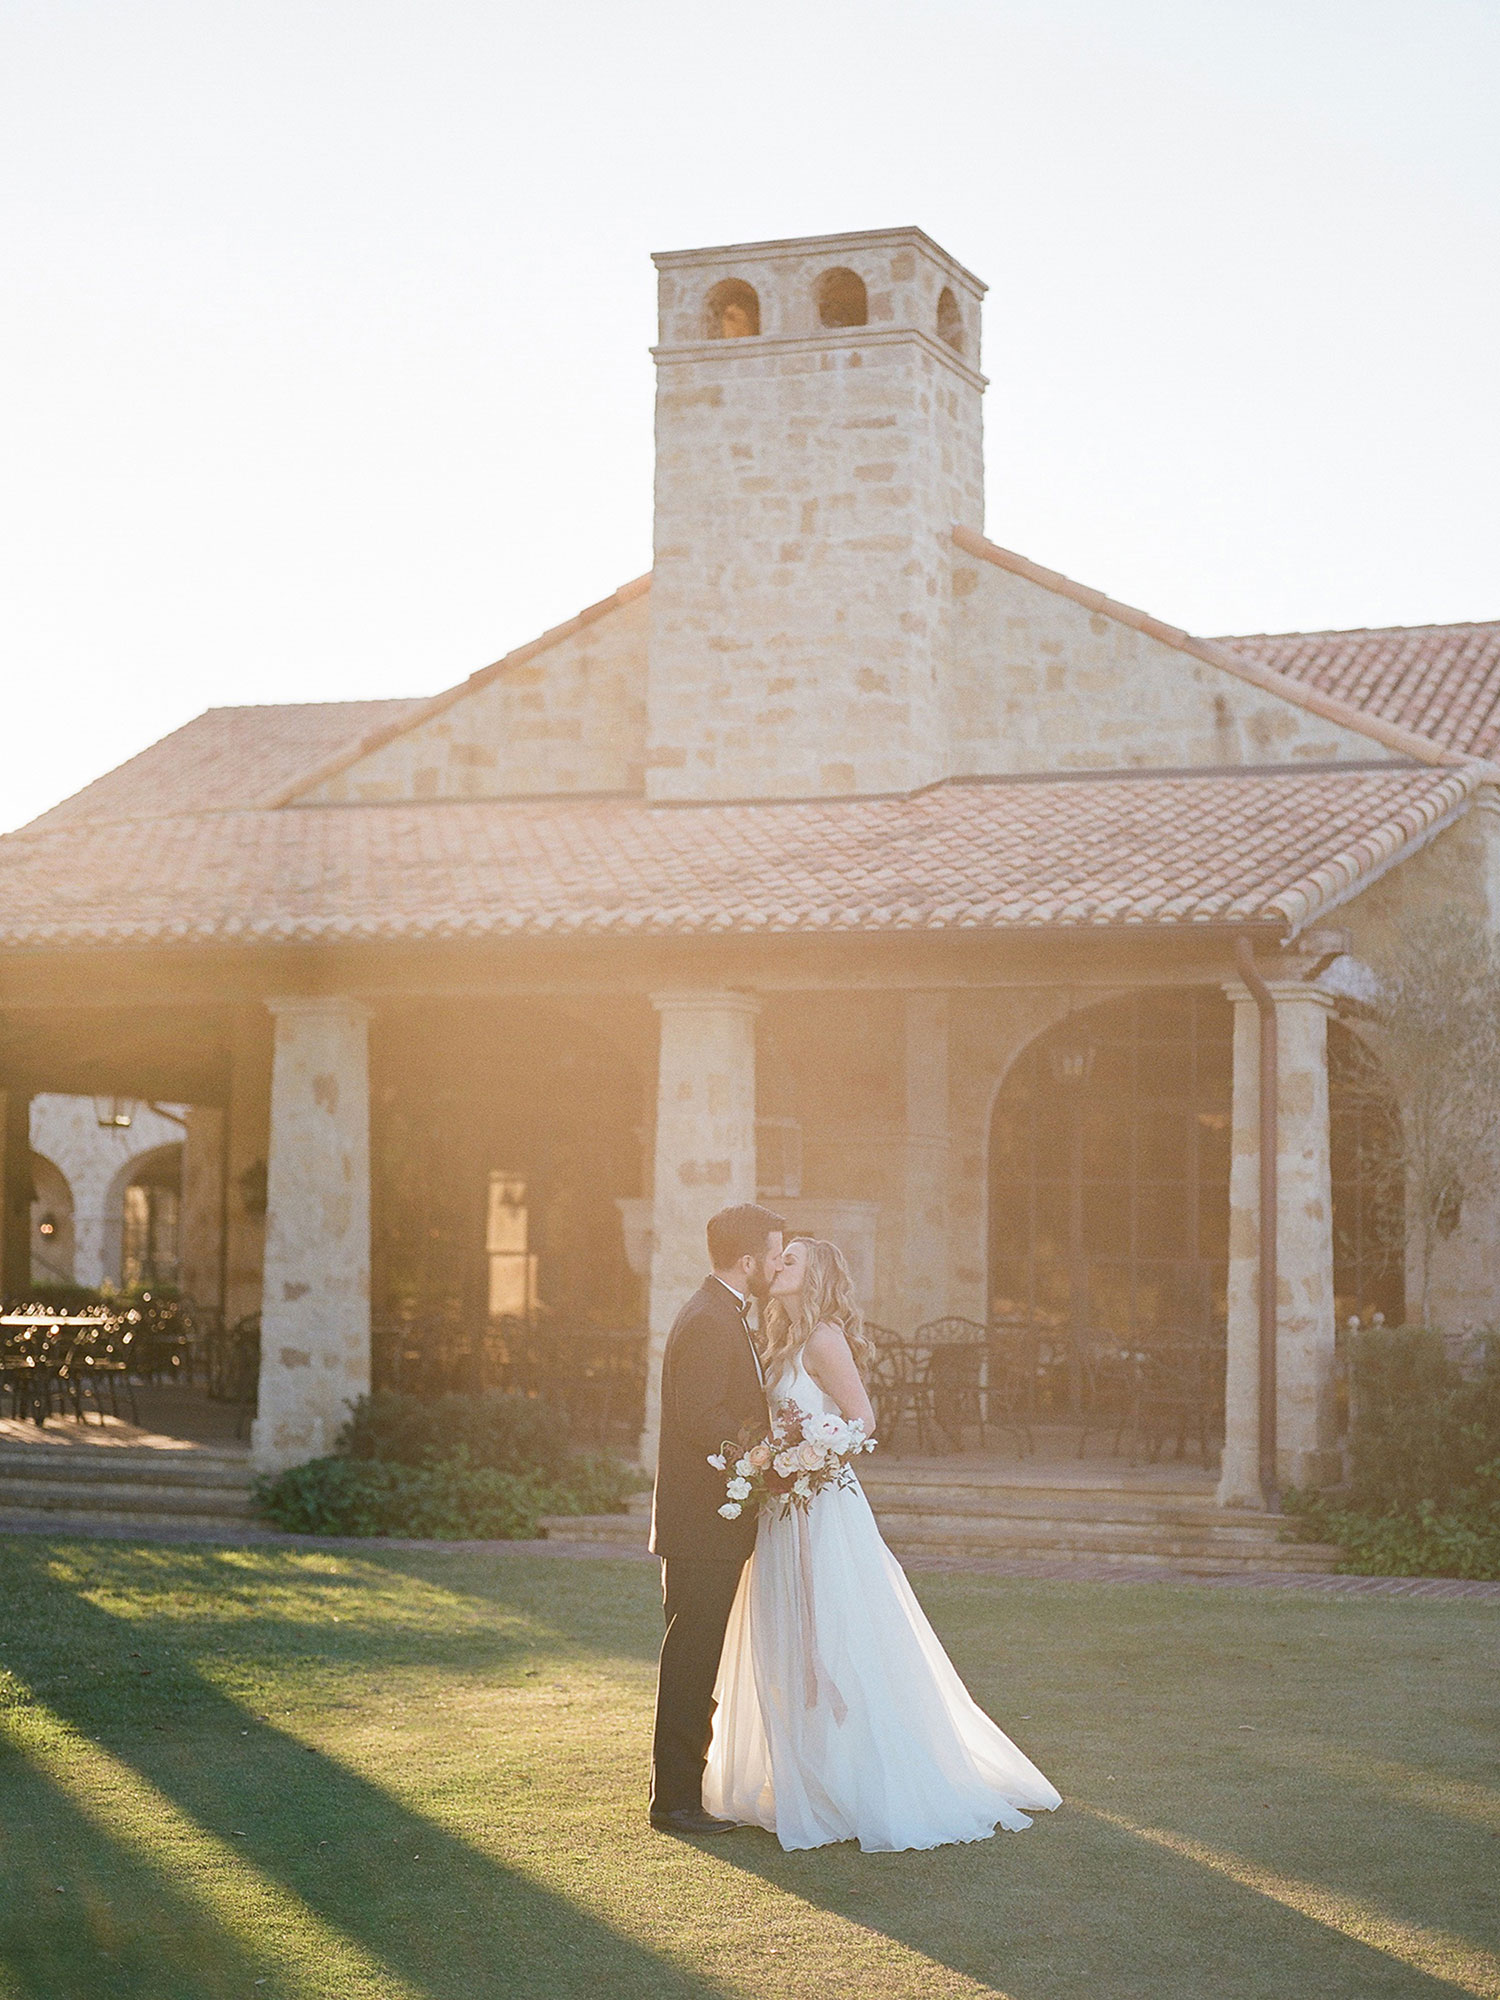 Wedding-photographer-Houston-Texas00021